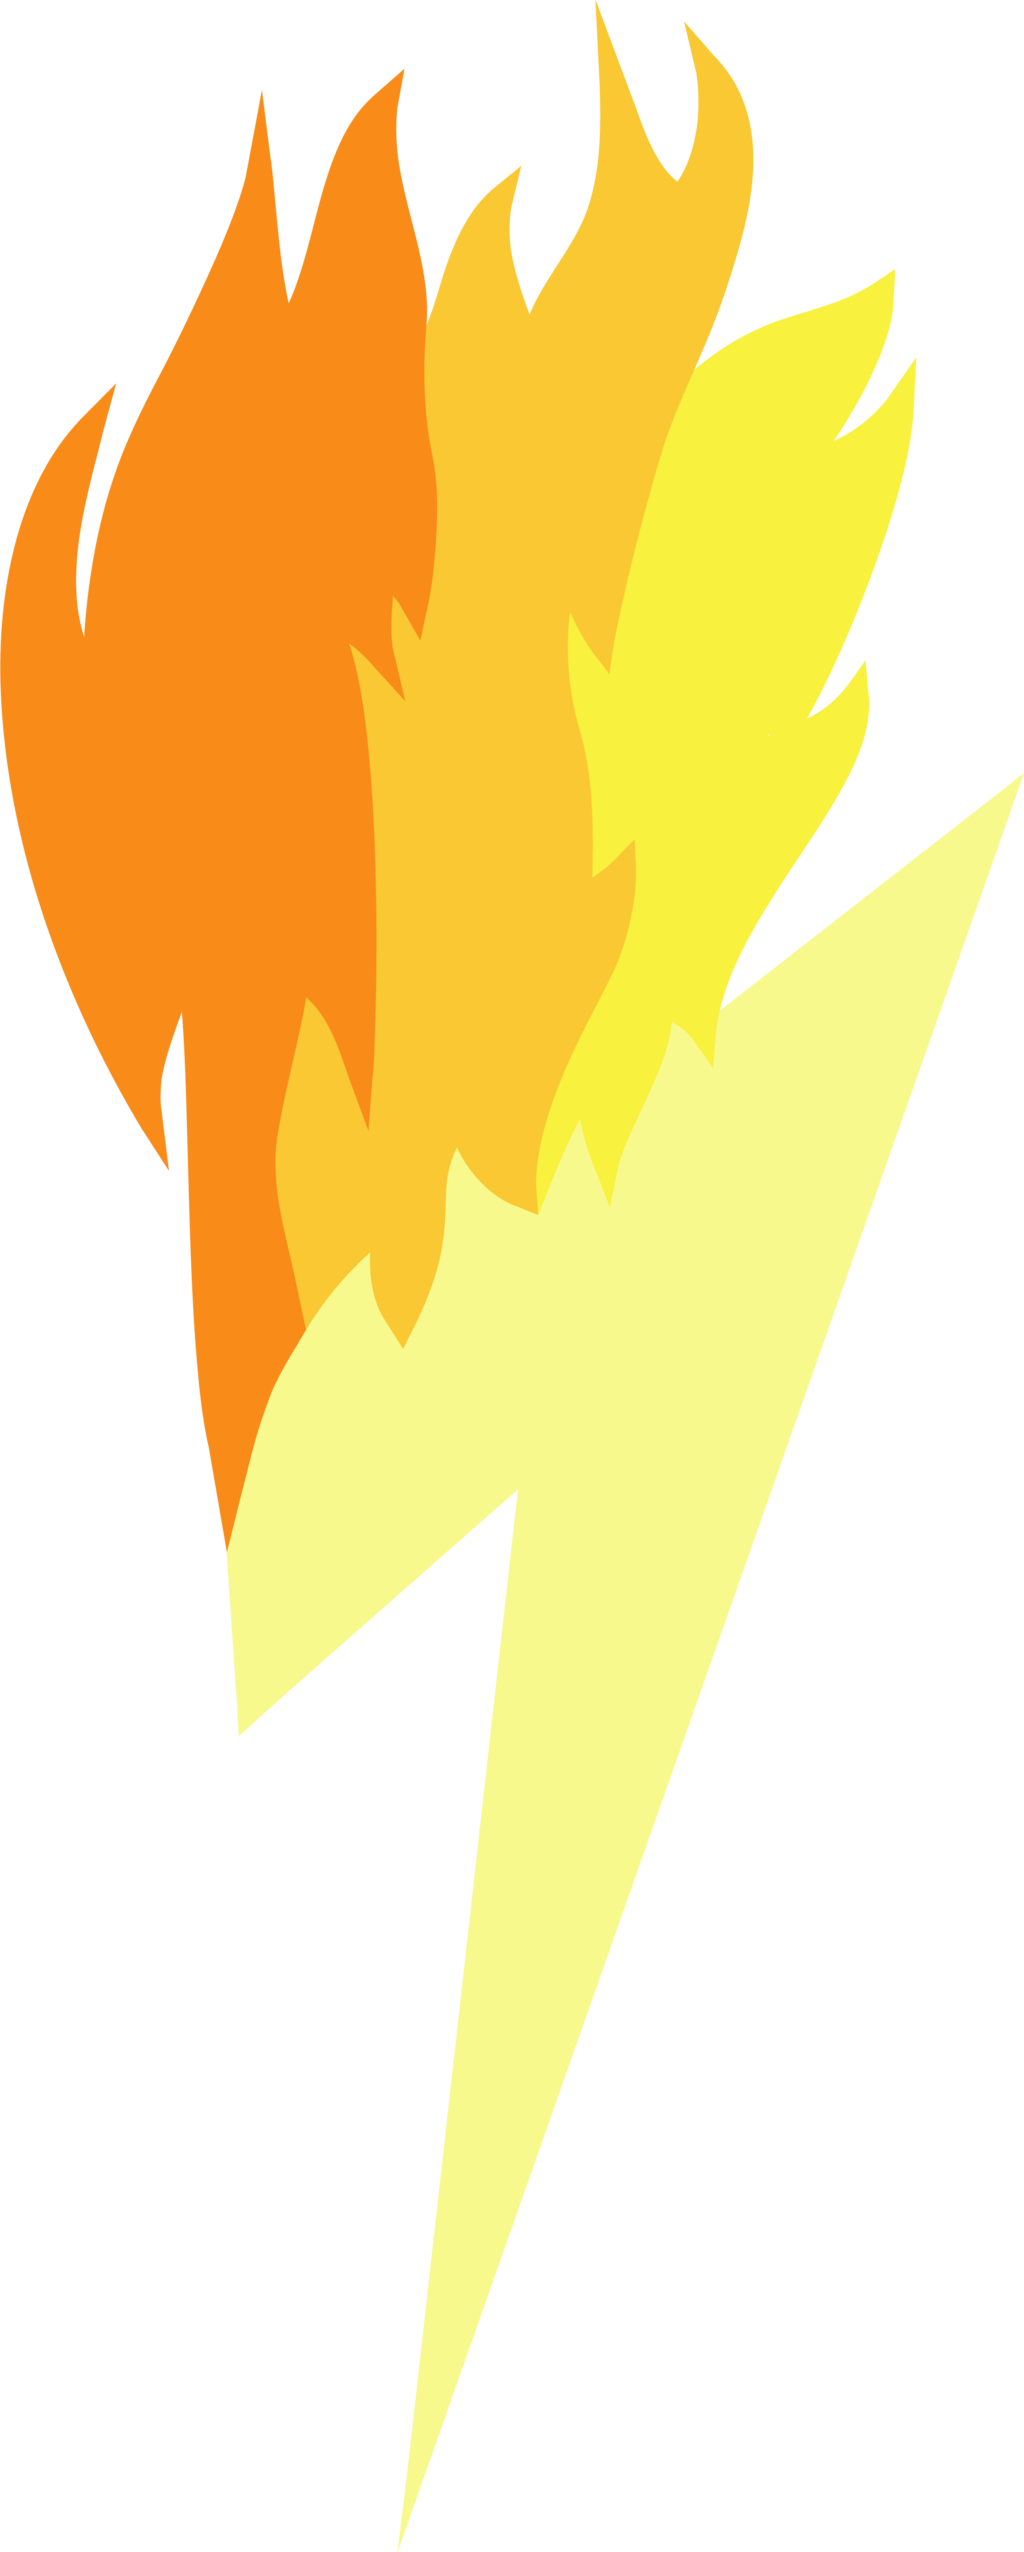 A Yellow And Orange Lightning Bolt